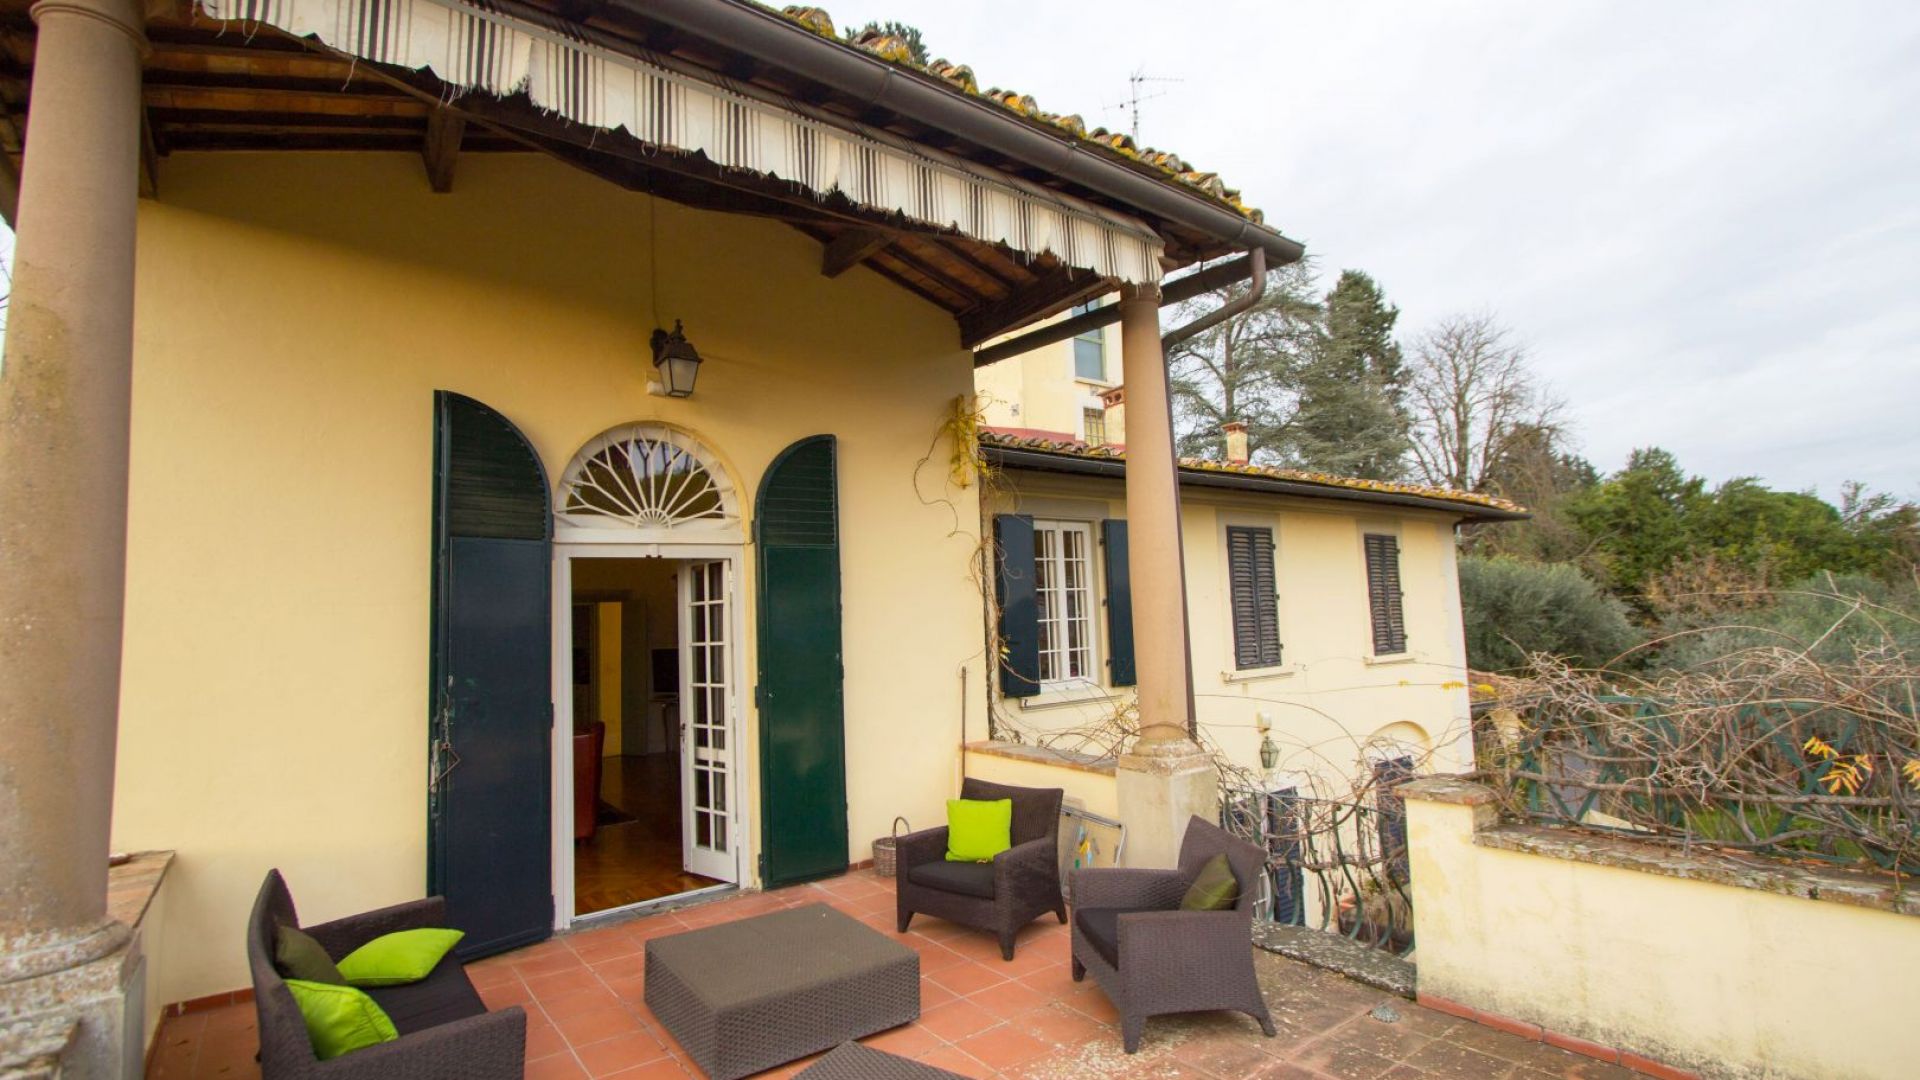 For sale apartment in  Impruneta Toscana